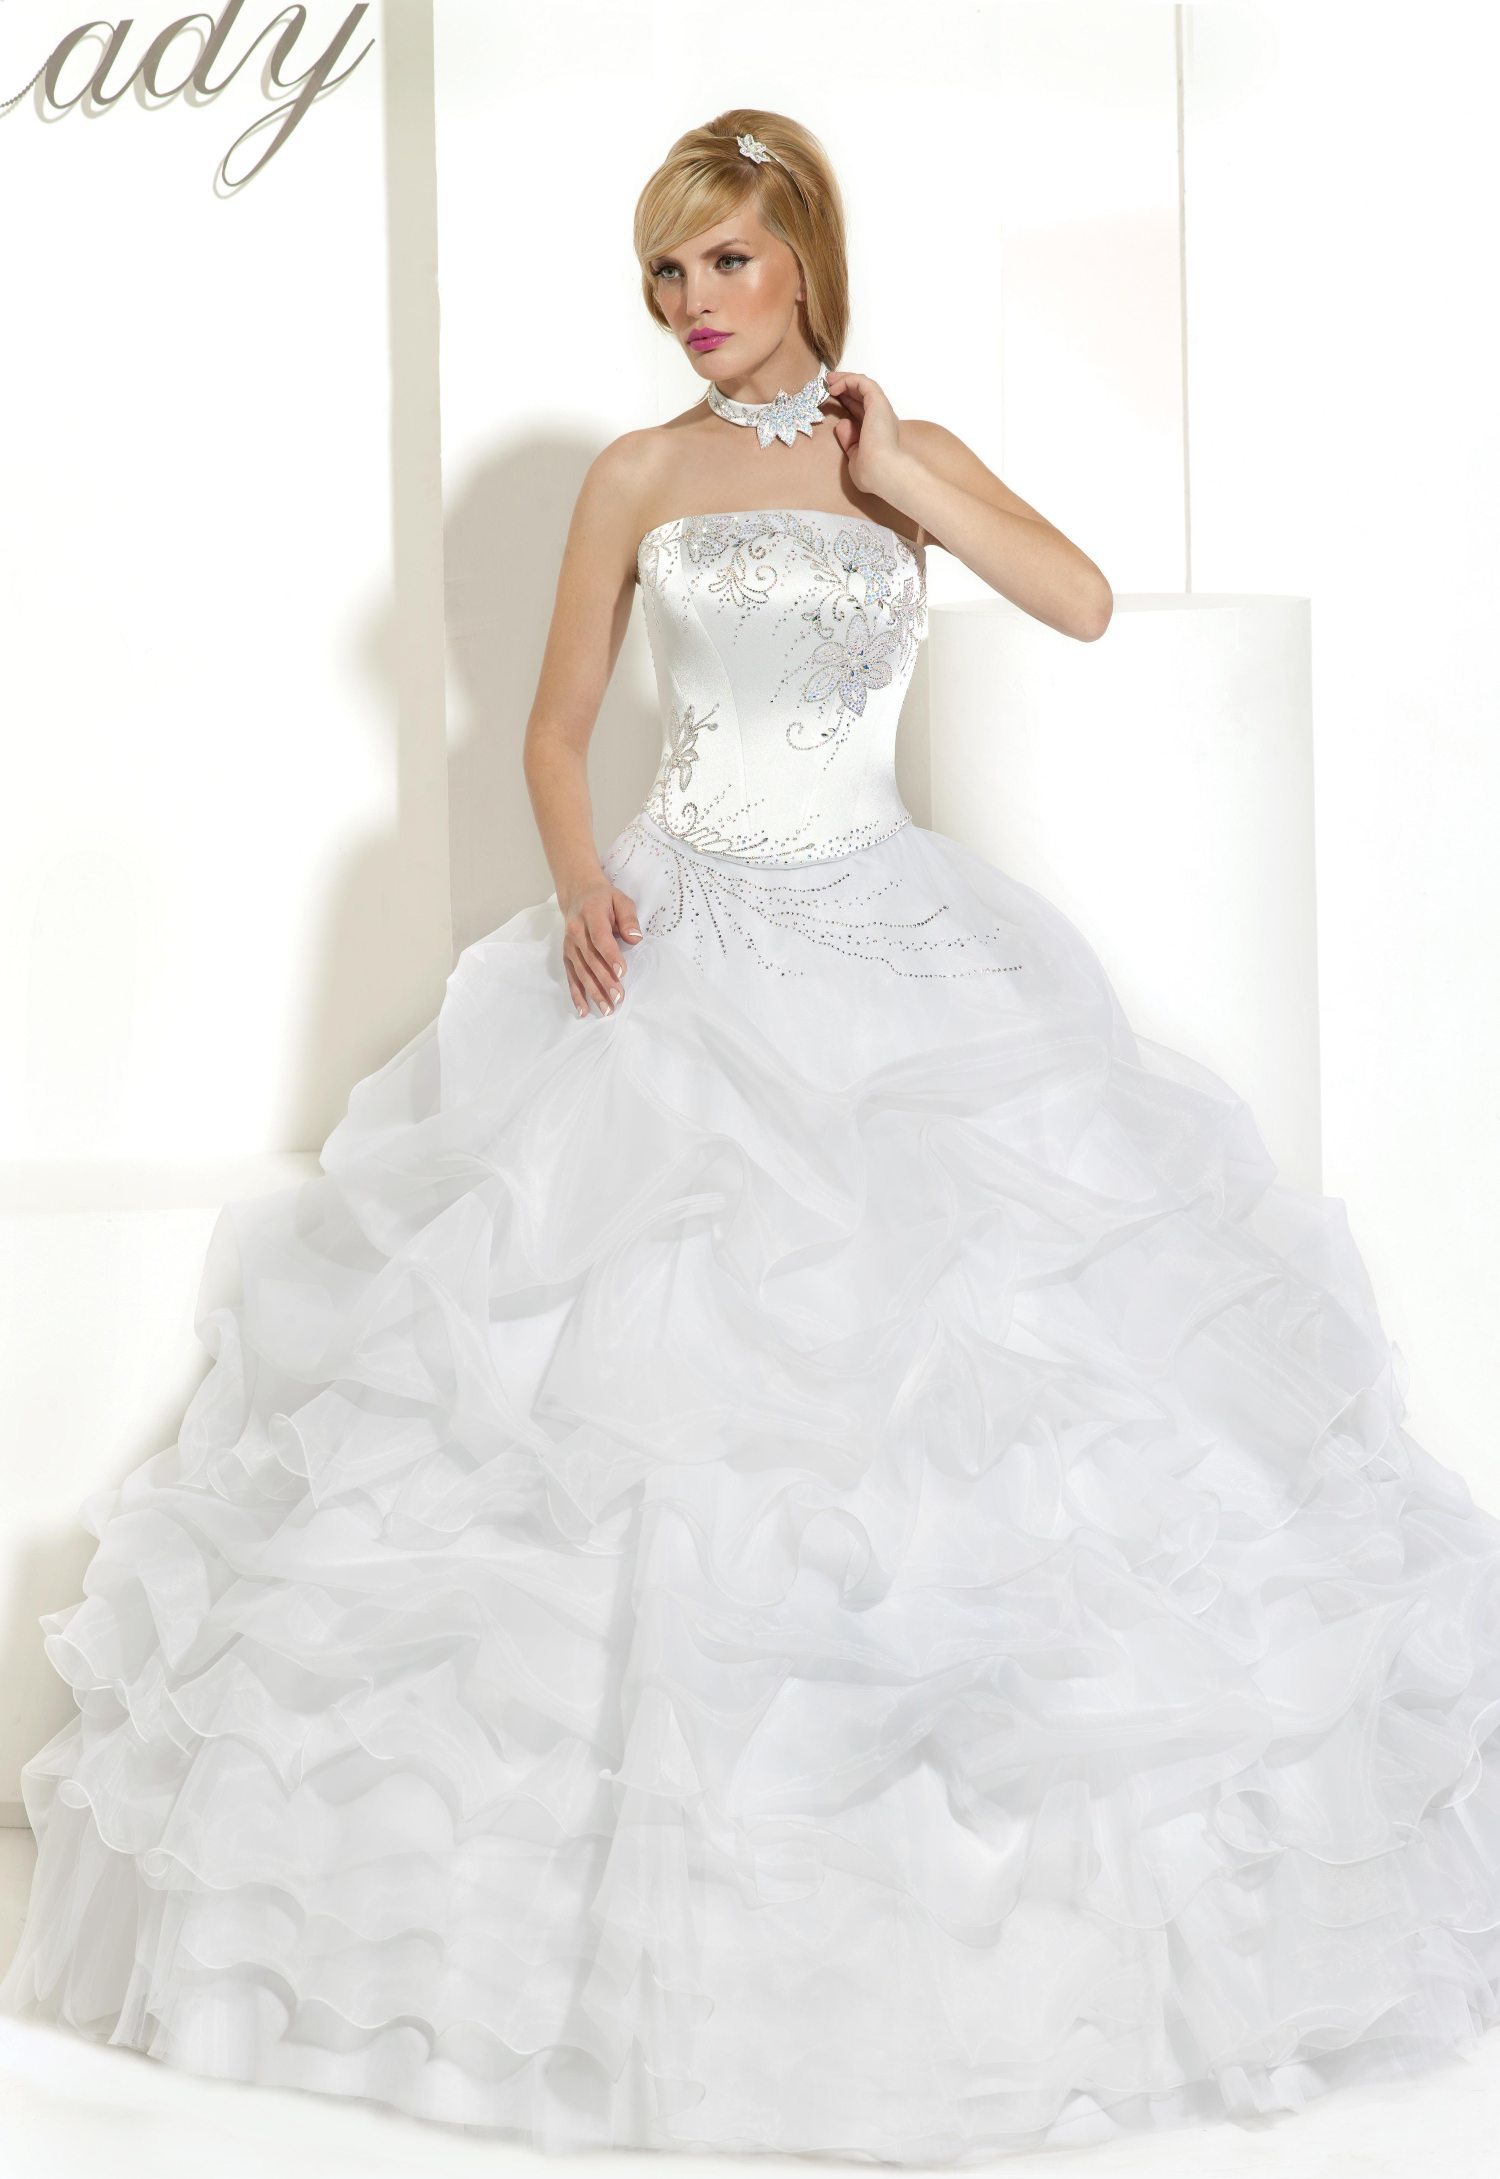 Wedding Dress - Lady Valeria - Lady Valeria Skirt - Lady Valeria Necklace